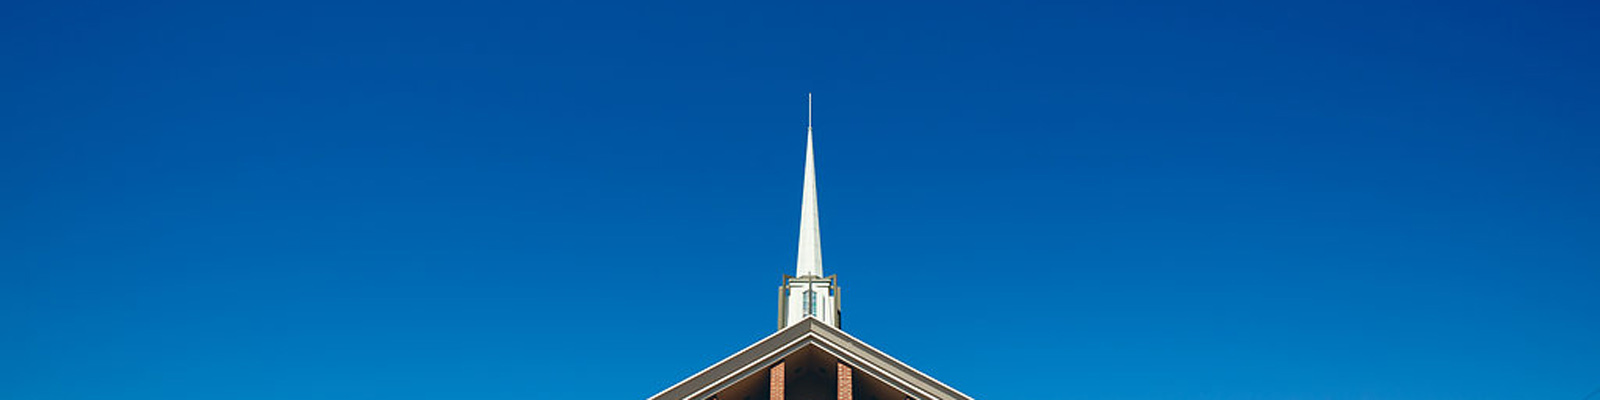 Jefferson Avenue Church of Christ Podcast